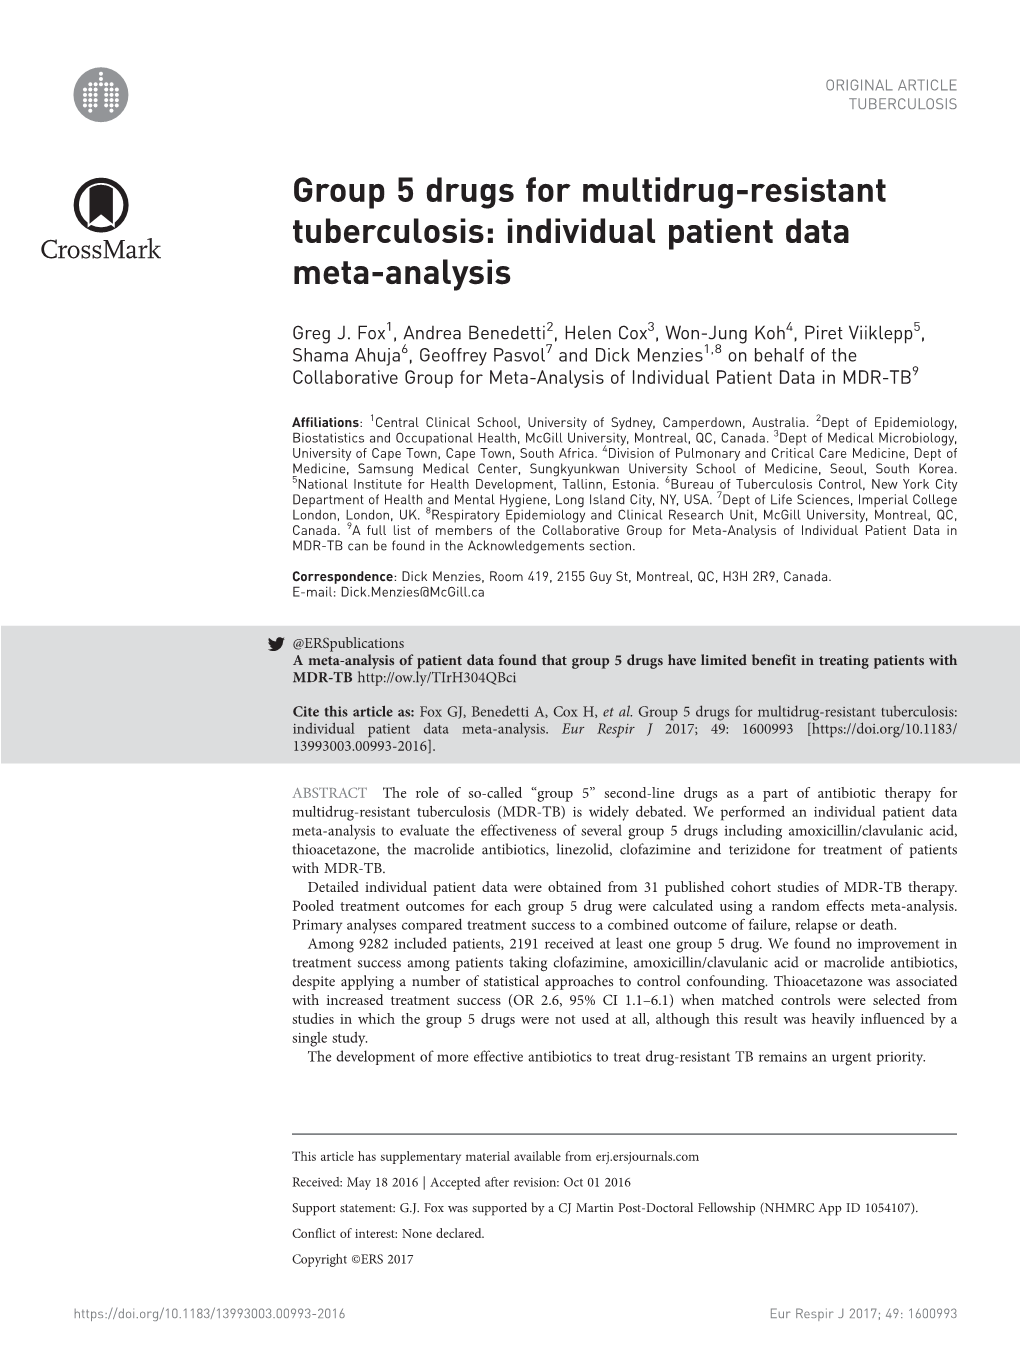 Group 5 Drugs for Multidrug-Resistant Tuberculosis: Individual Patient Data Meta-Analysis